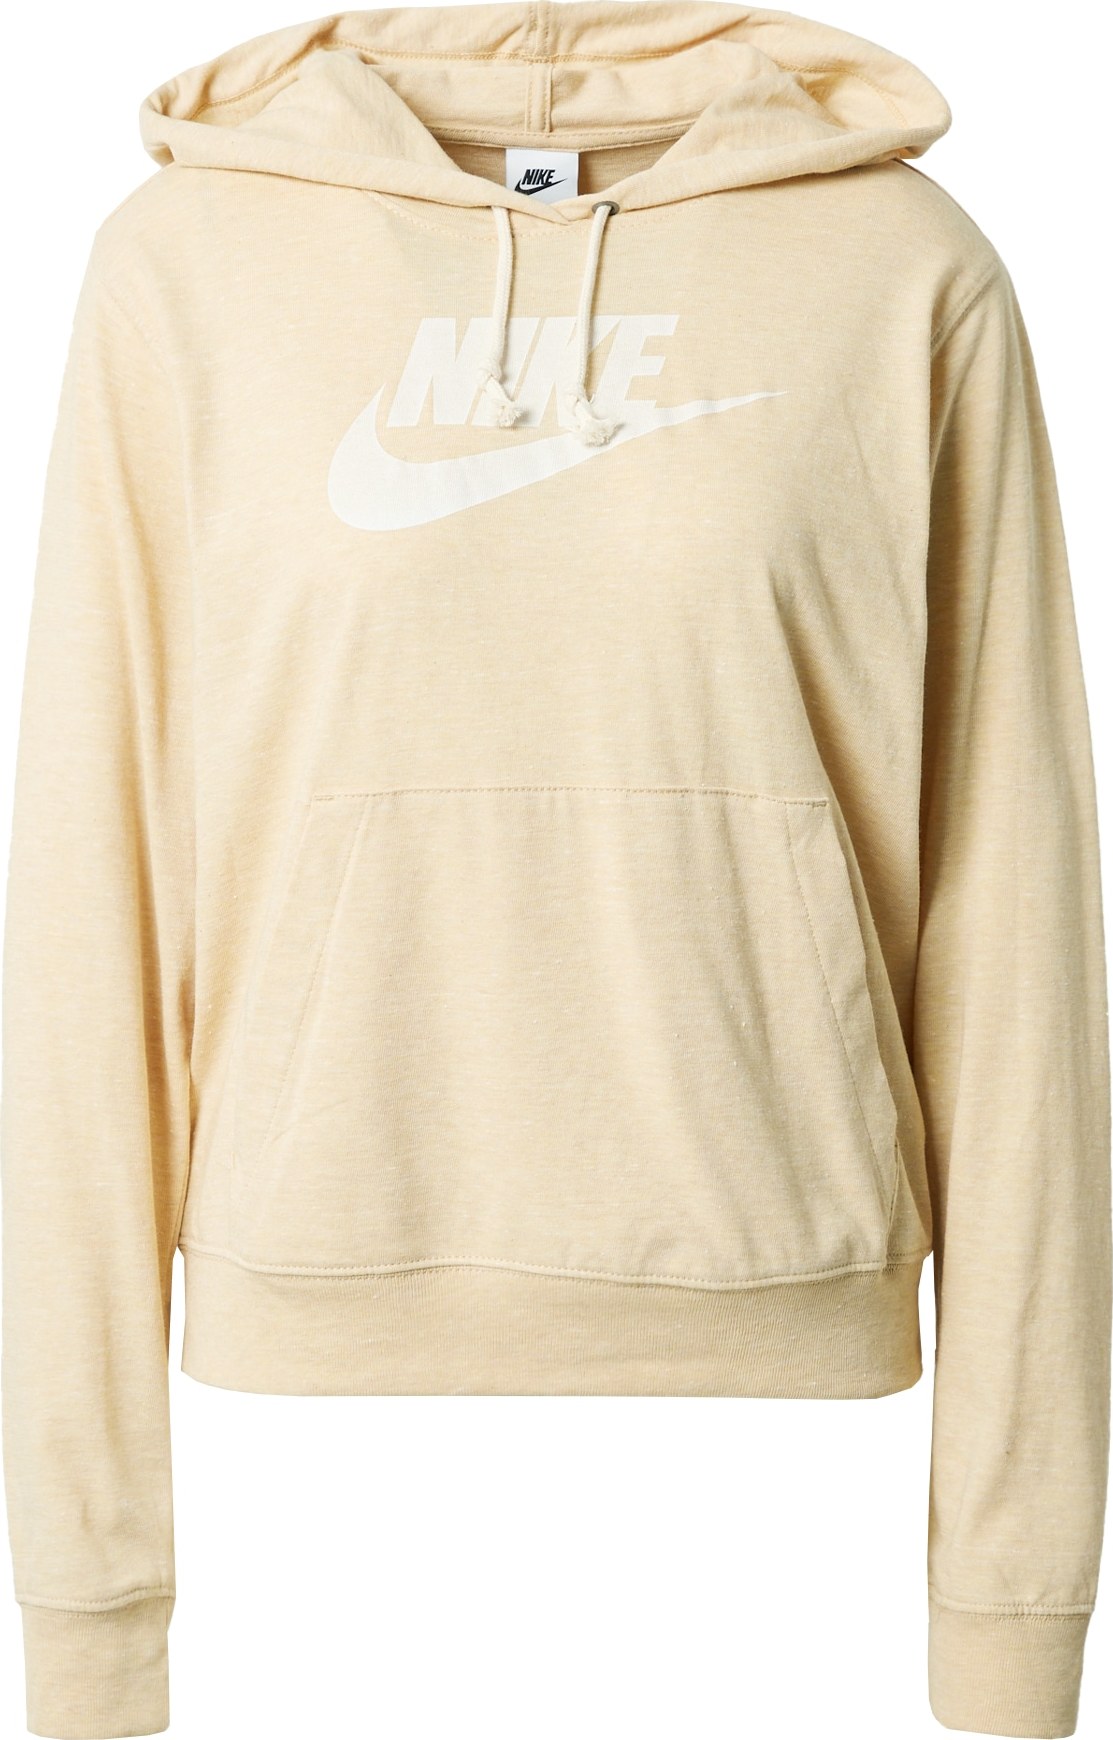 Mikina Nike Sportswear velbloudí / bílá